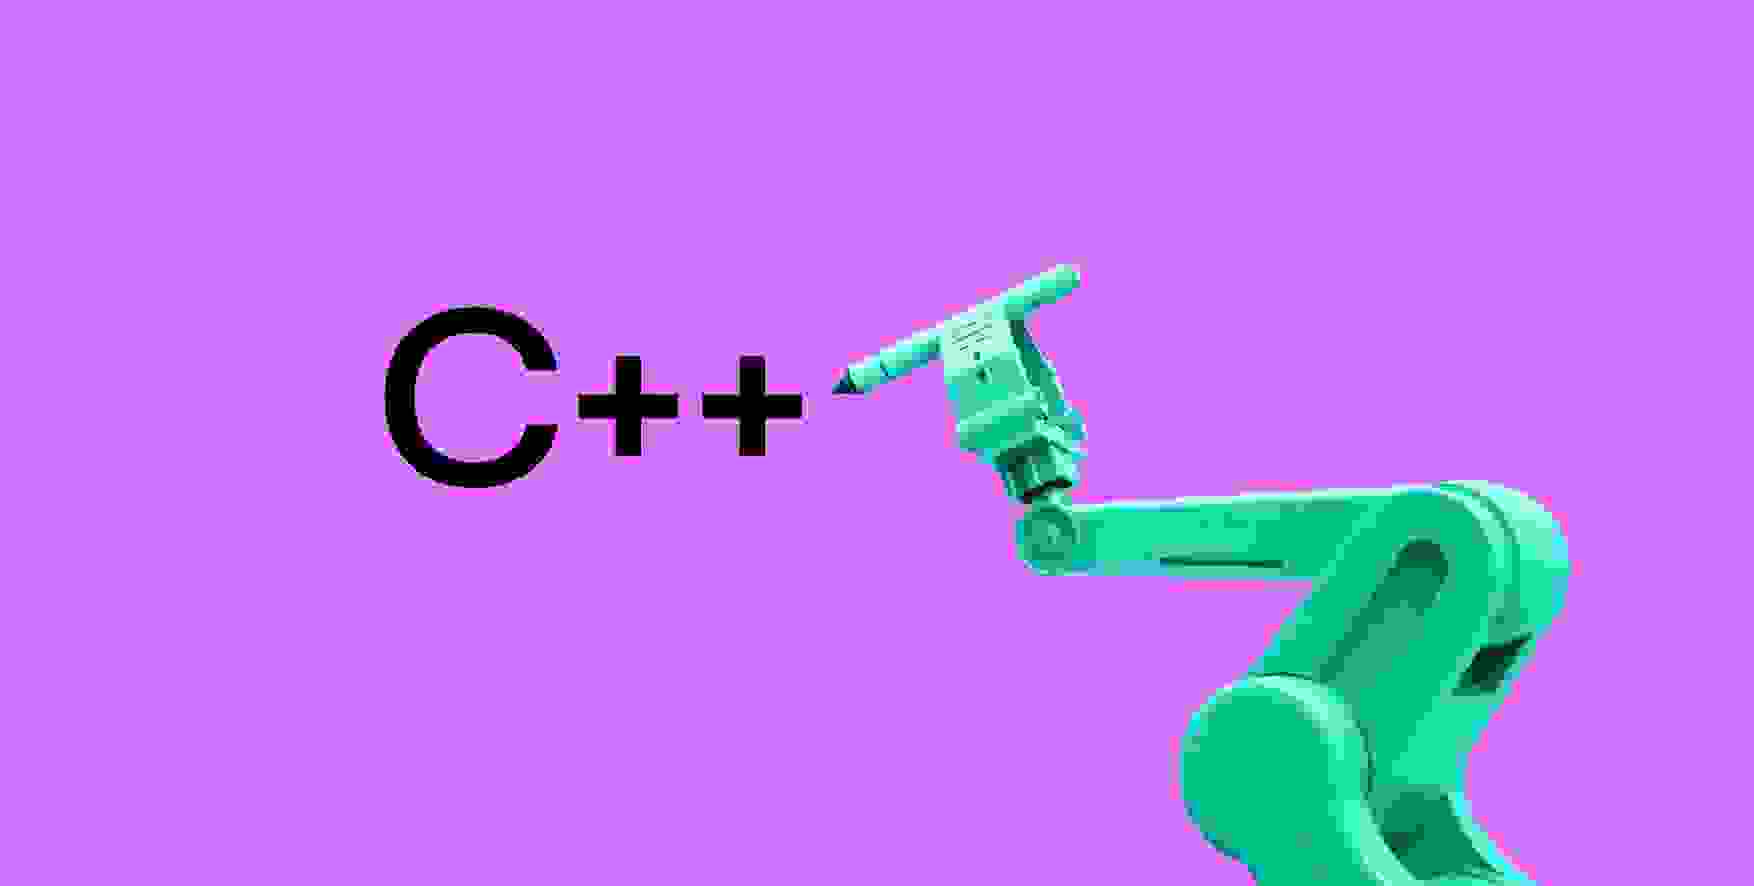 robotic arm writes C++ on purple background